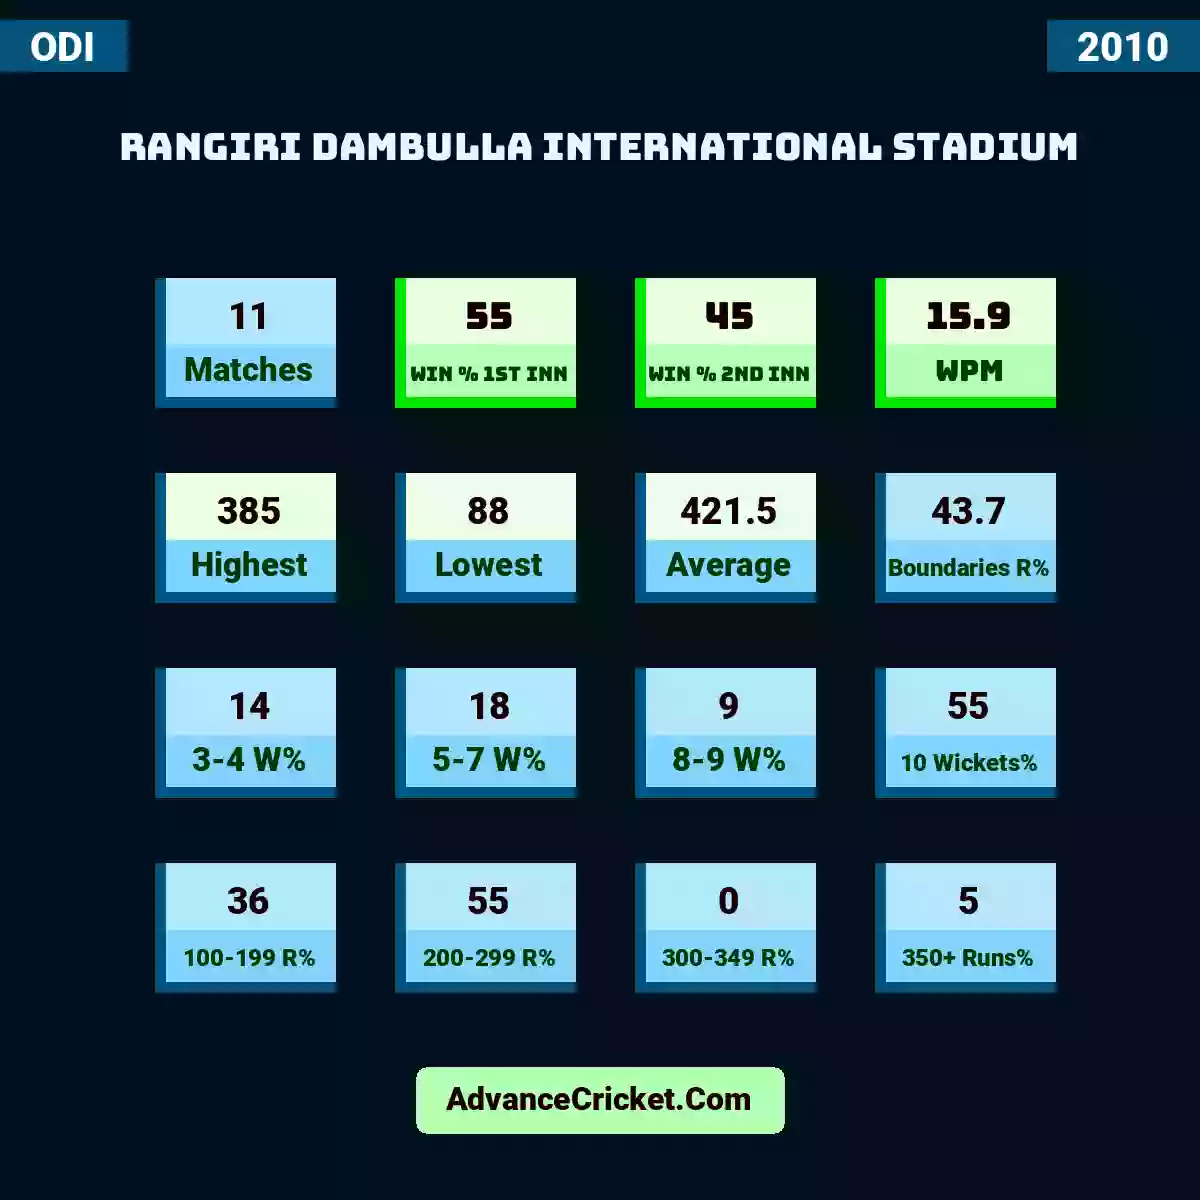 Image showing Rangiri Dambulla International Stadium with Matches: 11, Win % 1st Inn: 55, Win % 2nd Inn: 45, WPM: 15.9, Highest: 385, Lowest: 88, Average: 421.5, Boundaries R%: 43.7, 3-4 W%: 14, 5-7 W%: 18, 8-9 W%: 9, 10 Wickets%: 55, 100-199 R%: 36, 200-299 R%: 55, 300-349 R%: 0, 350+ Runs%: 5.